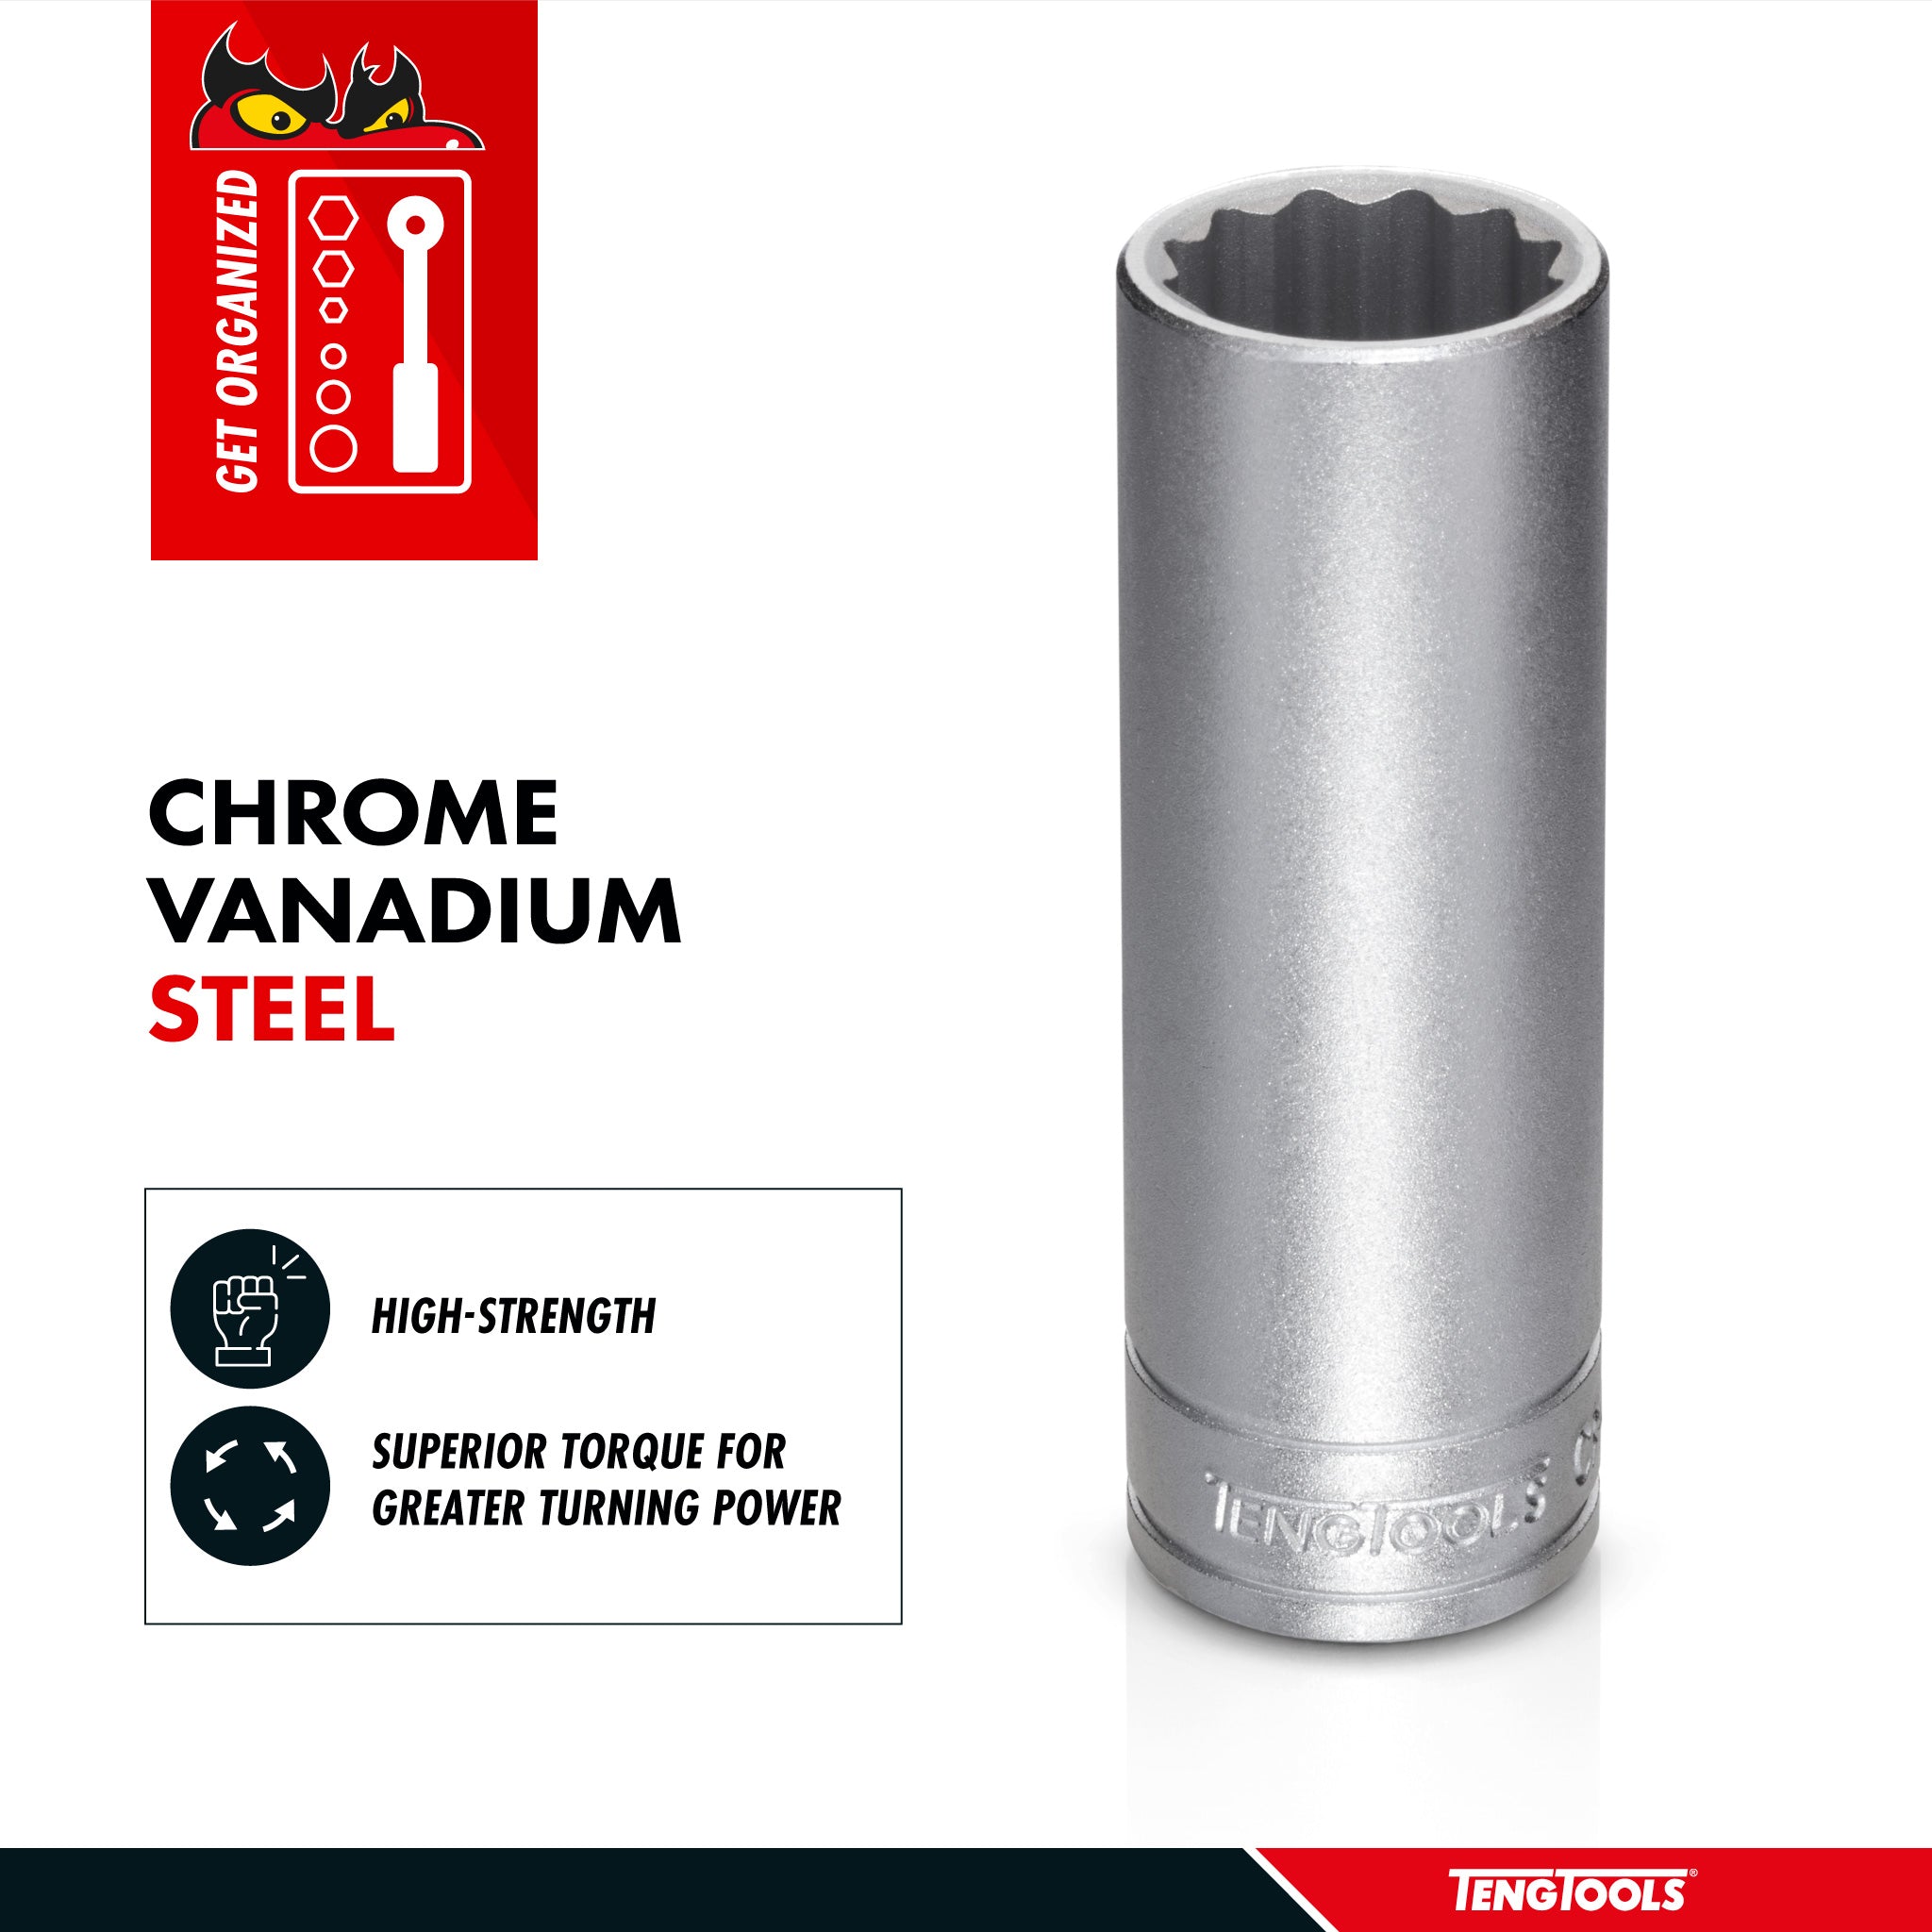 Teng Tools 1/2 Inch Drive 12 Point Metric Deep Chrome Vanadium Sockets - 22mm